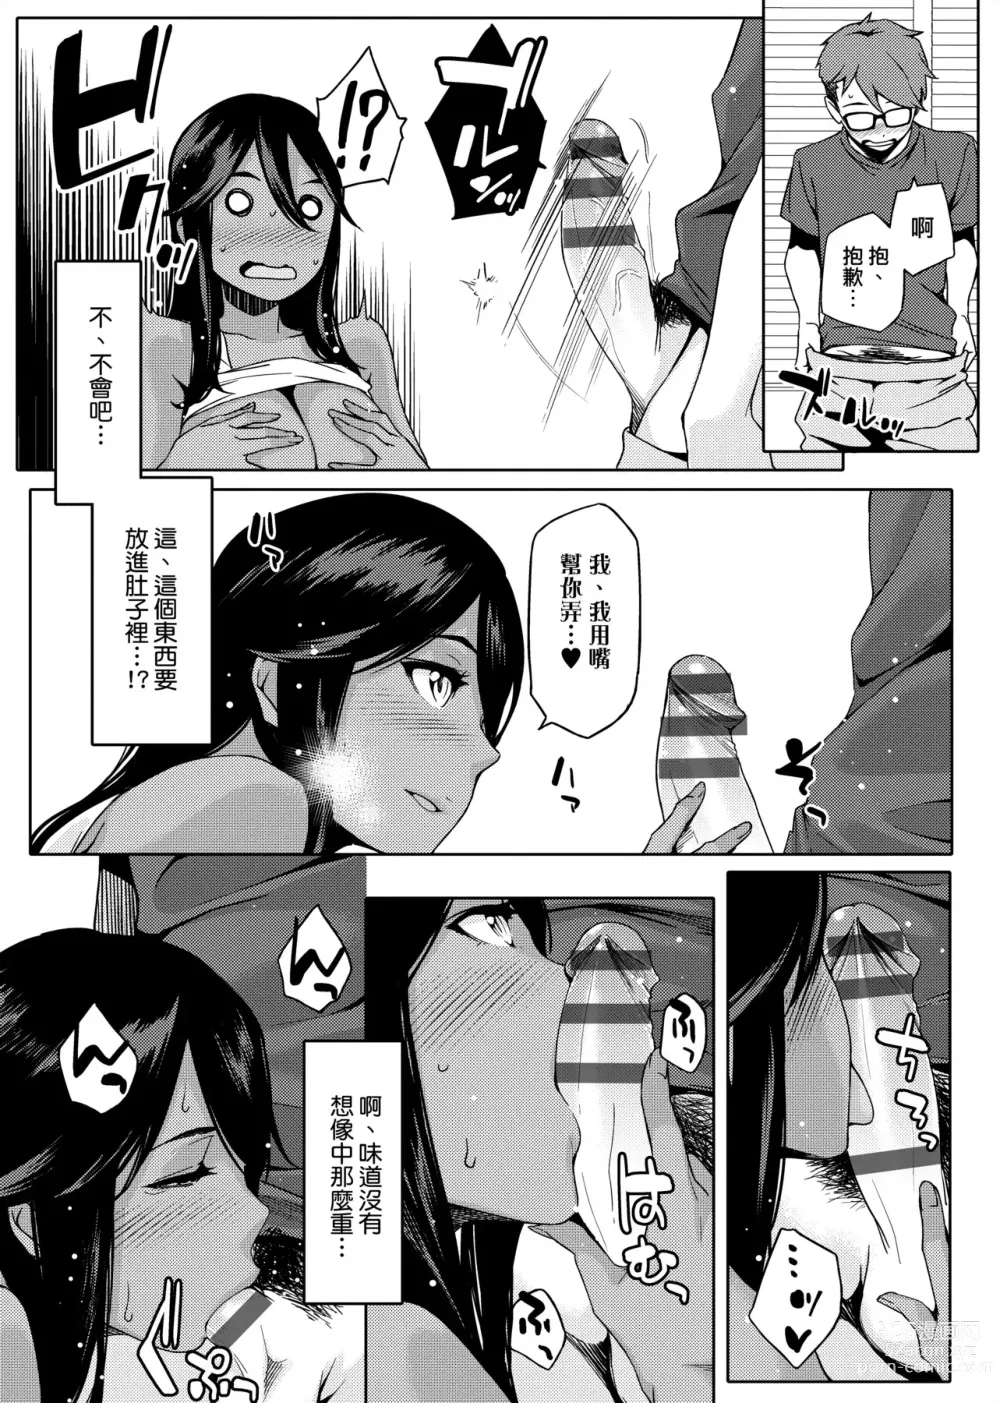 Page 26 of manga Natsu Koi Ota Girl - What Brings You to Japan?